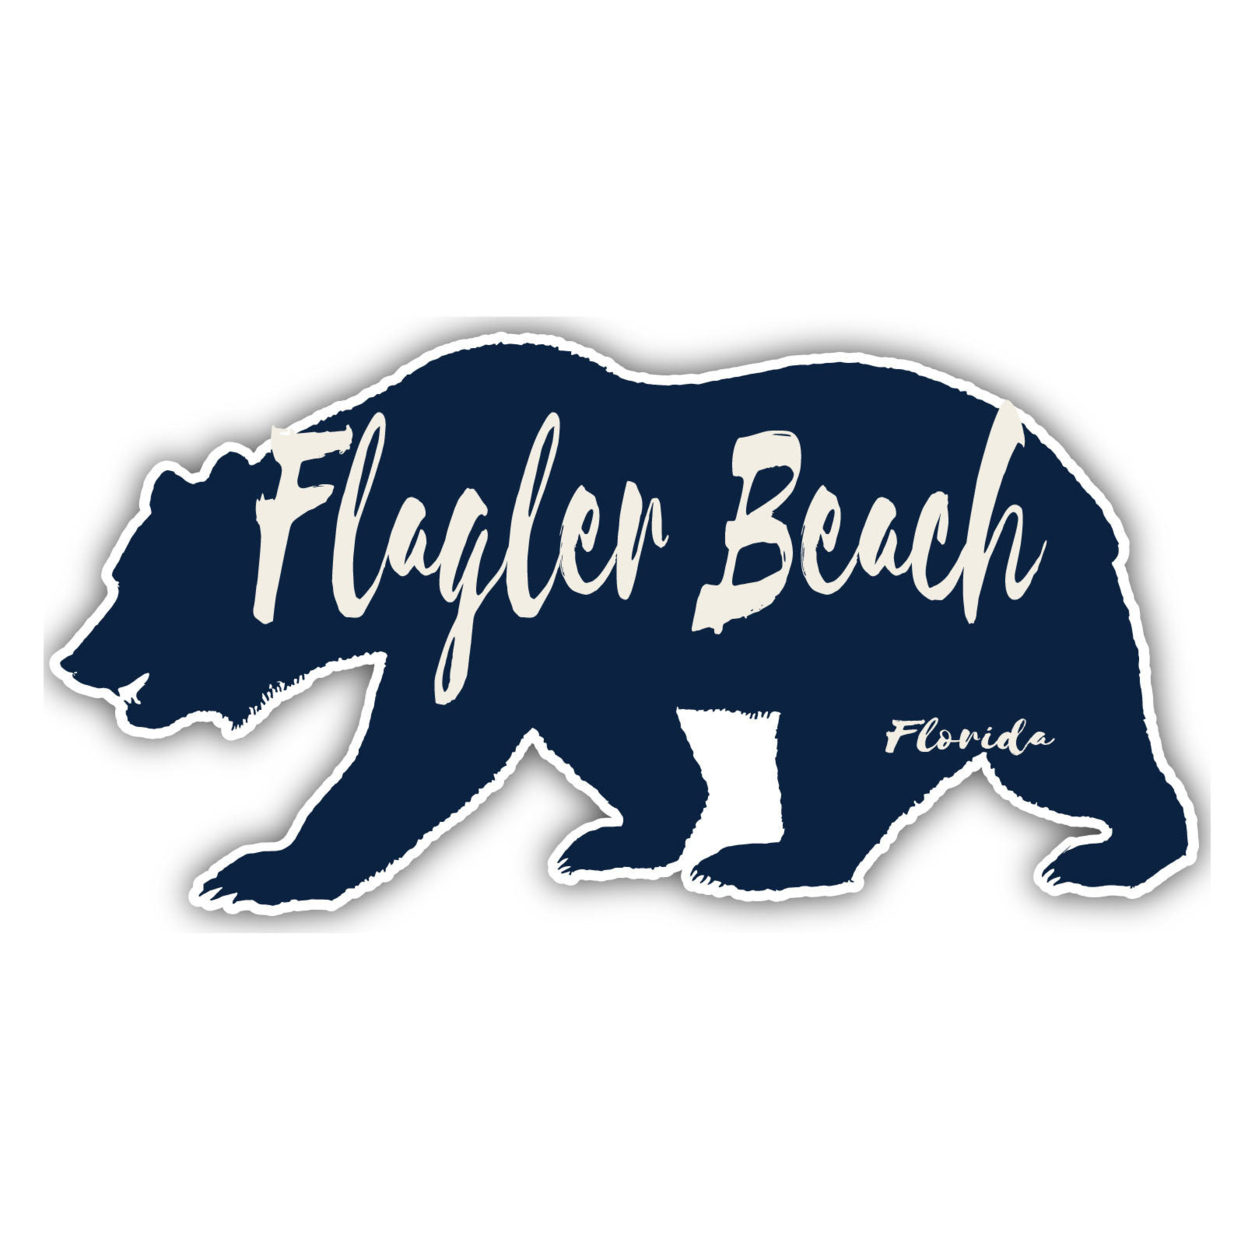 Flagler Beach Florida Souvenir Decorative Stickers (Choose Theme And Size) - Single Unit, 8-Inch, Camp Life